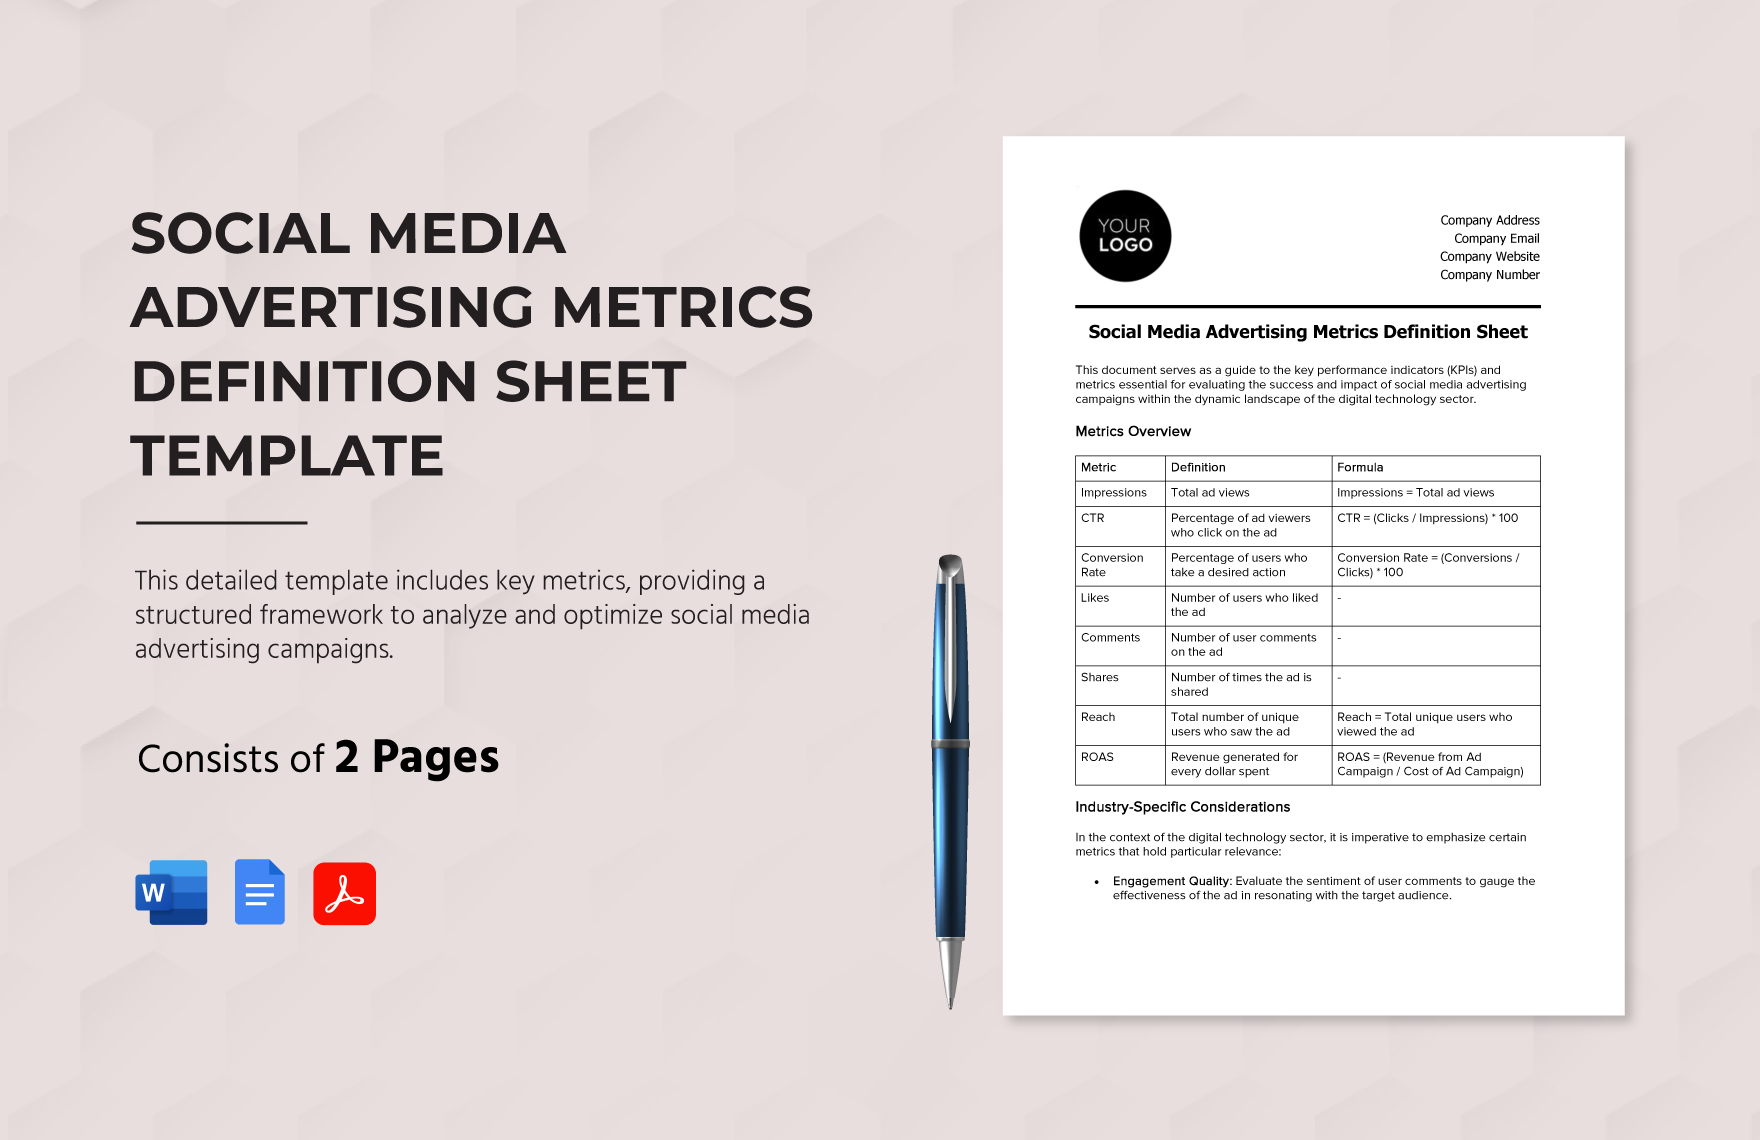 Social Media Advertising Metrics Definition Sheet Template